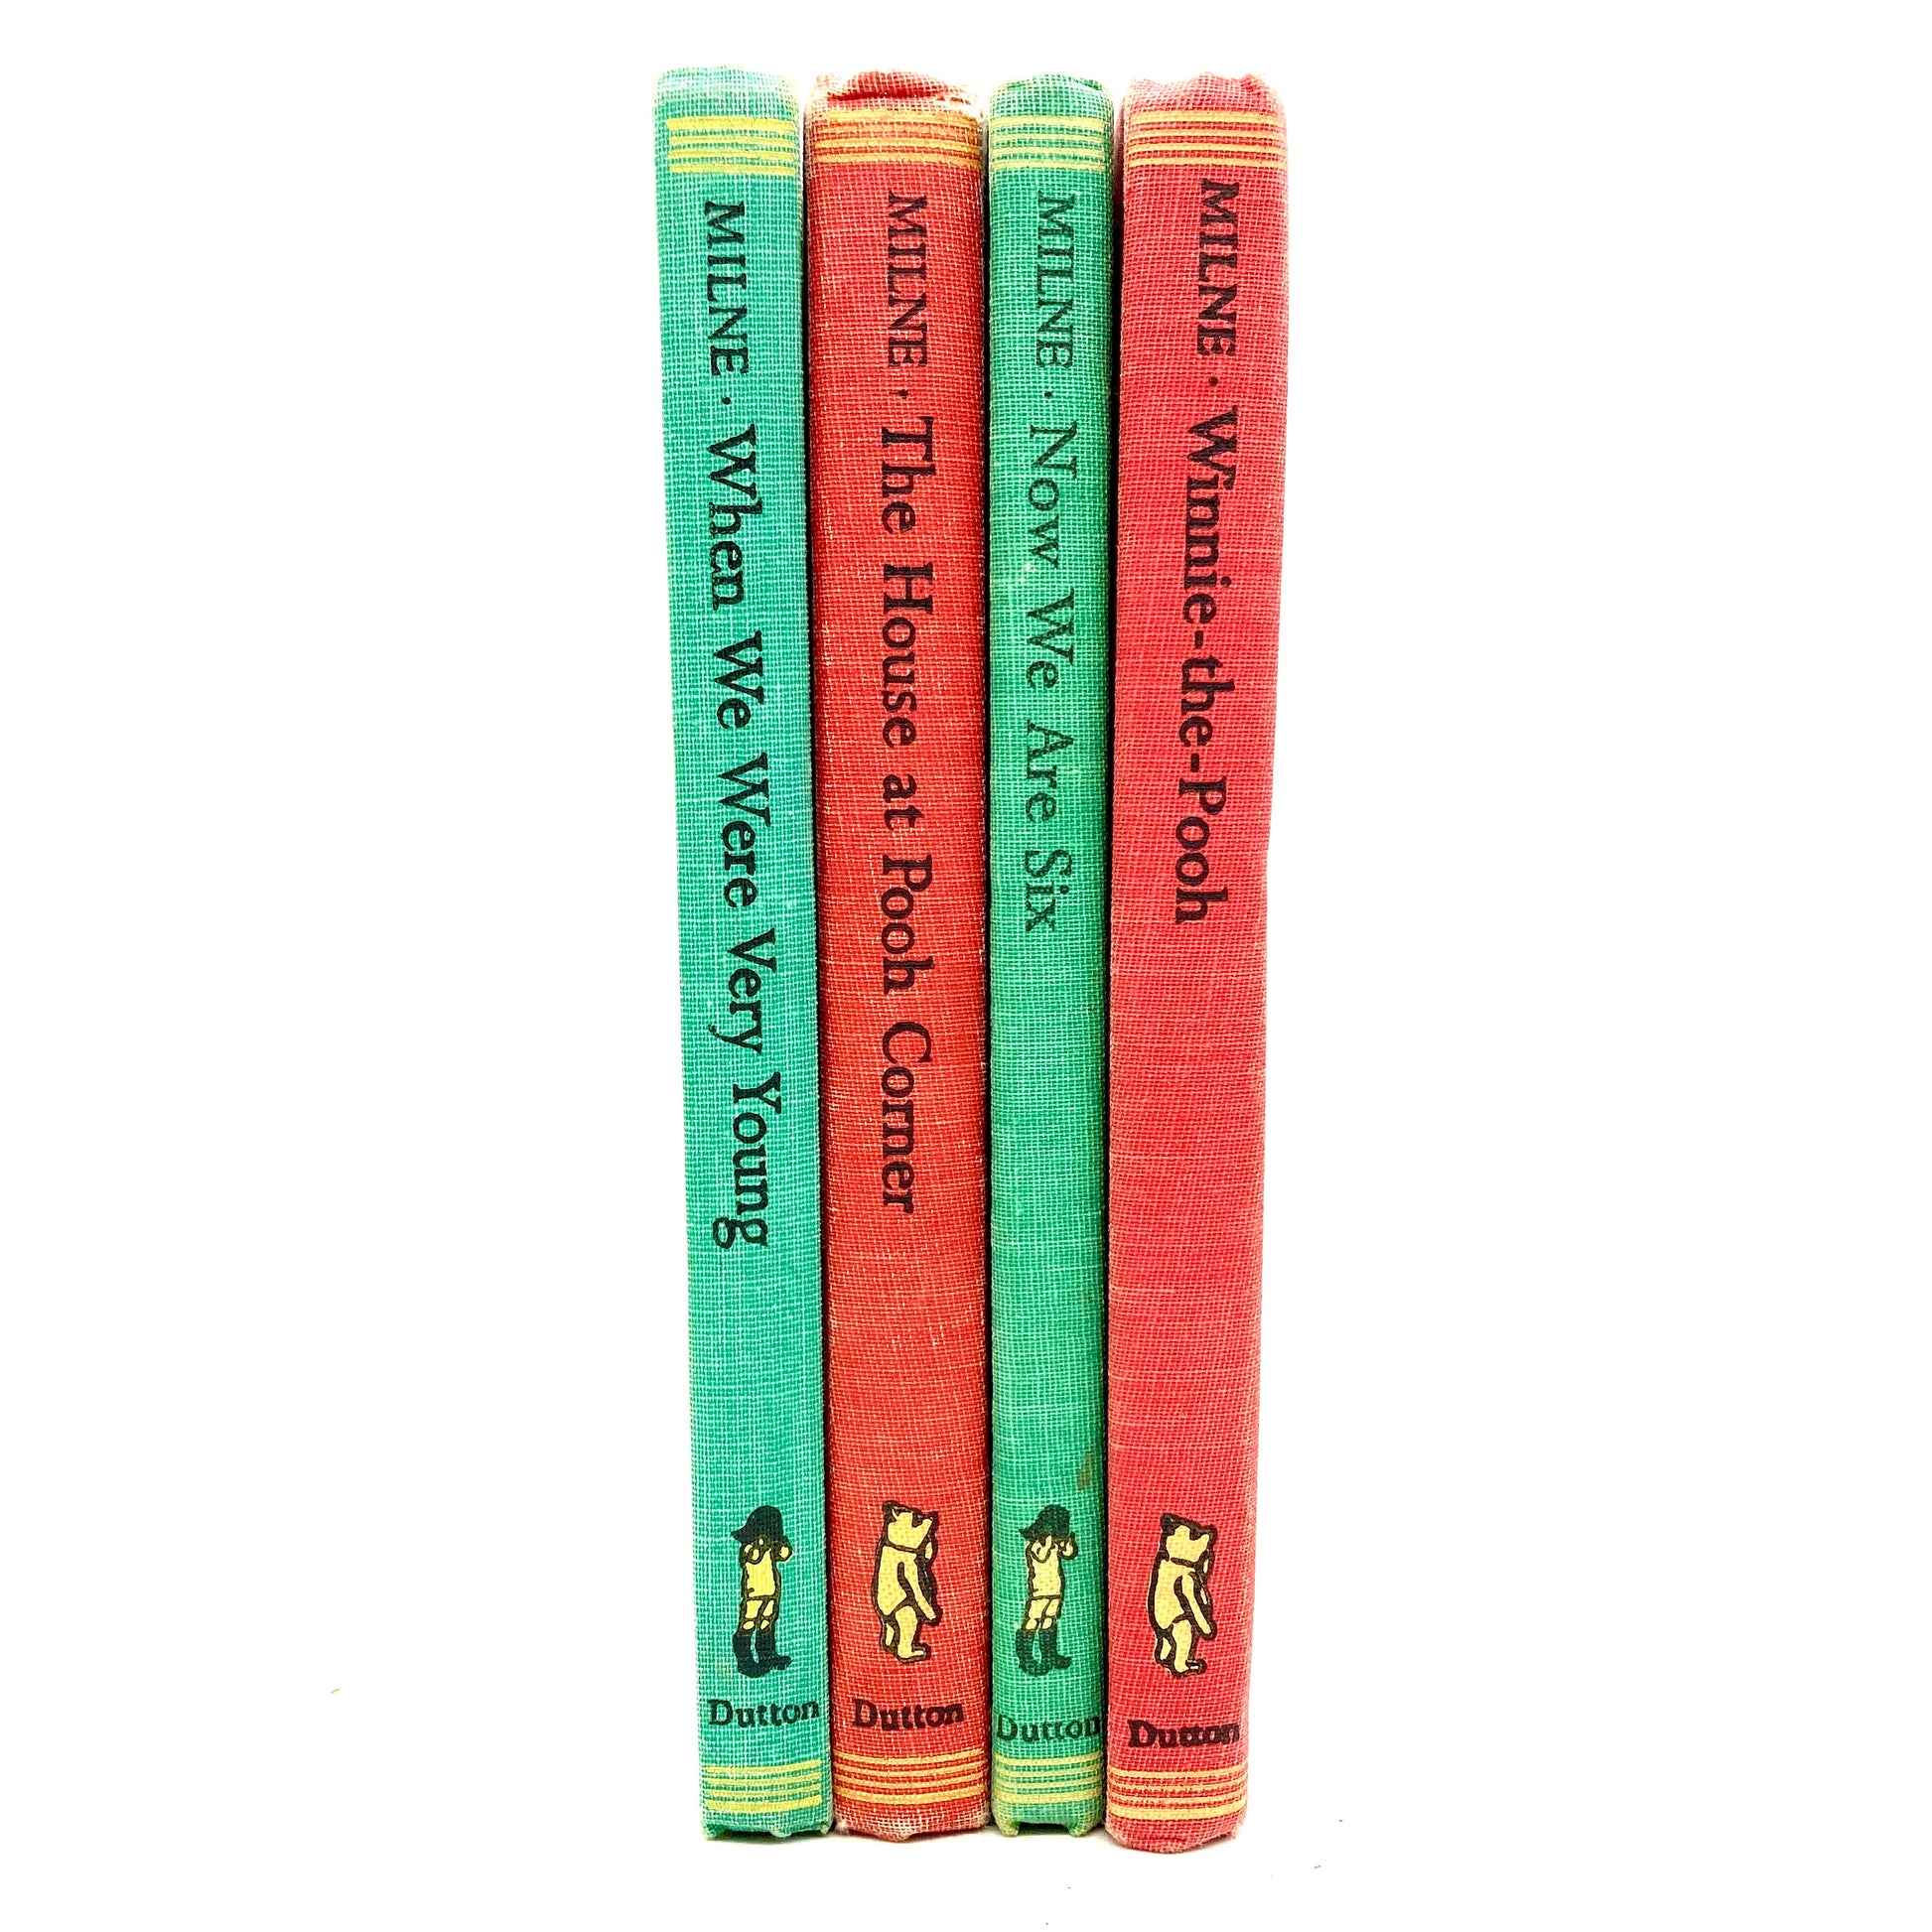 MILNE, A.A. 4 Volume "Pooh's Library" Set [E.P. Dutton & Co, 1961] - Buzz Bookstore